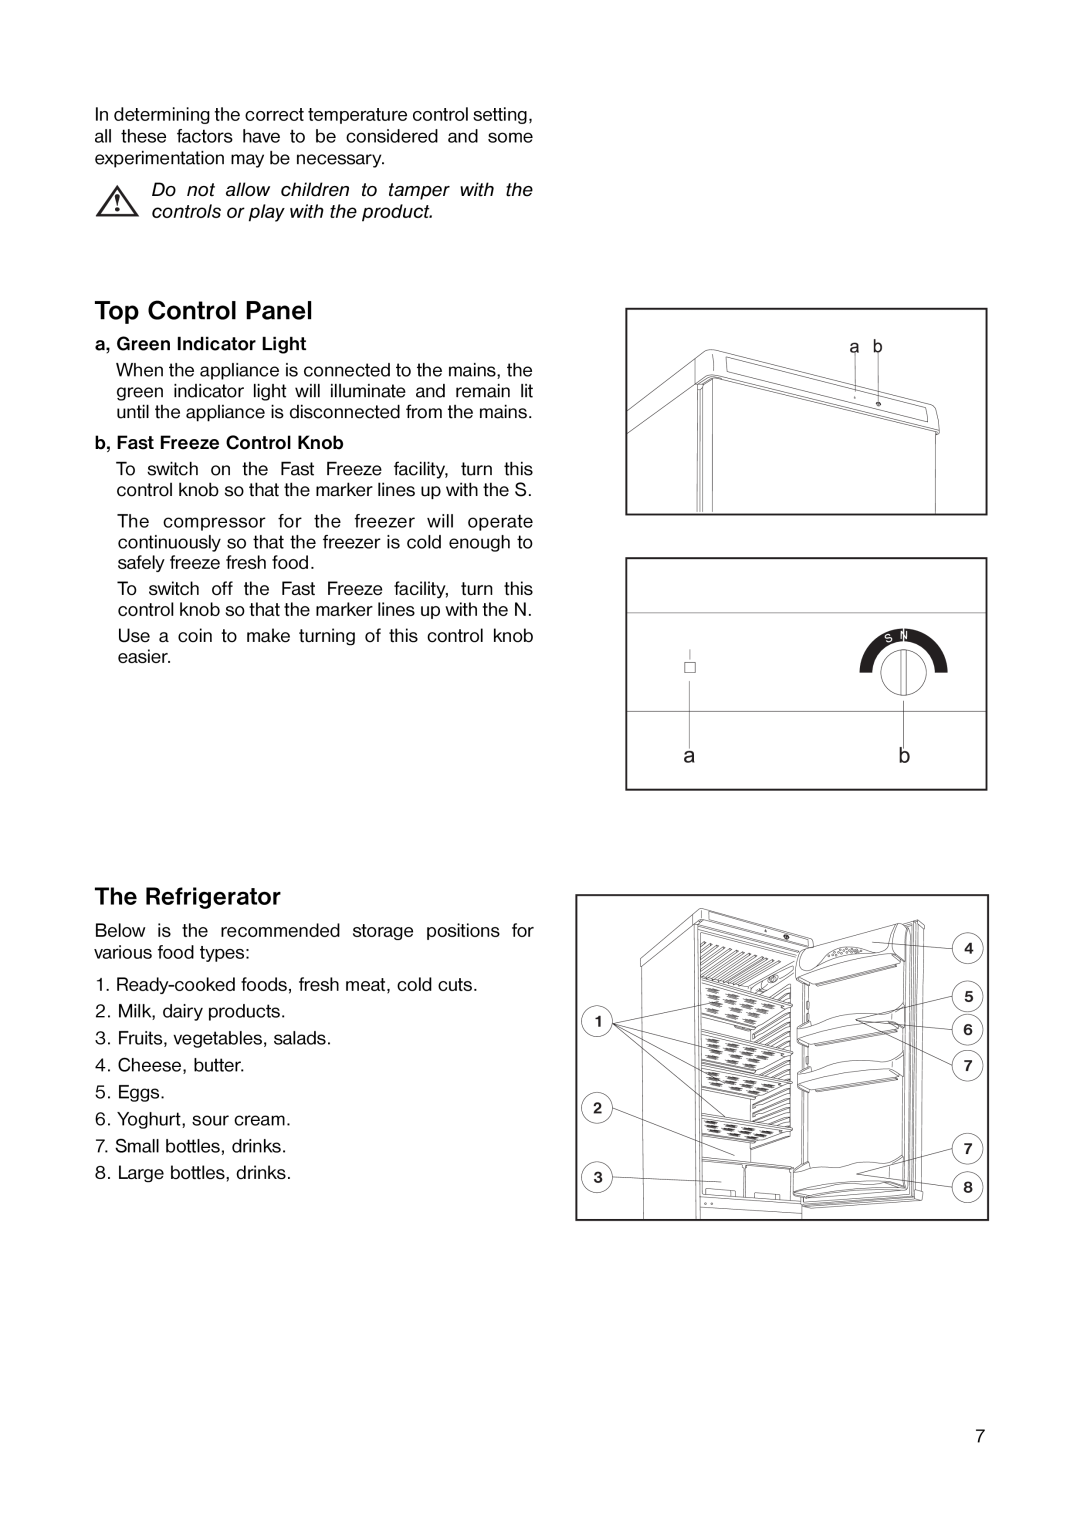 Zanussi ZCO 99/4 W manual The Refrigerator, Top Control Panel 